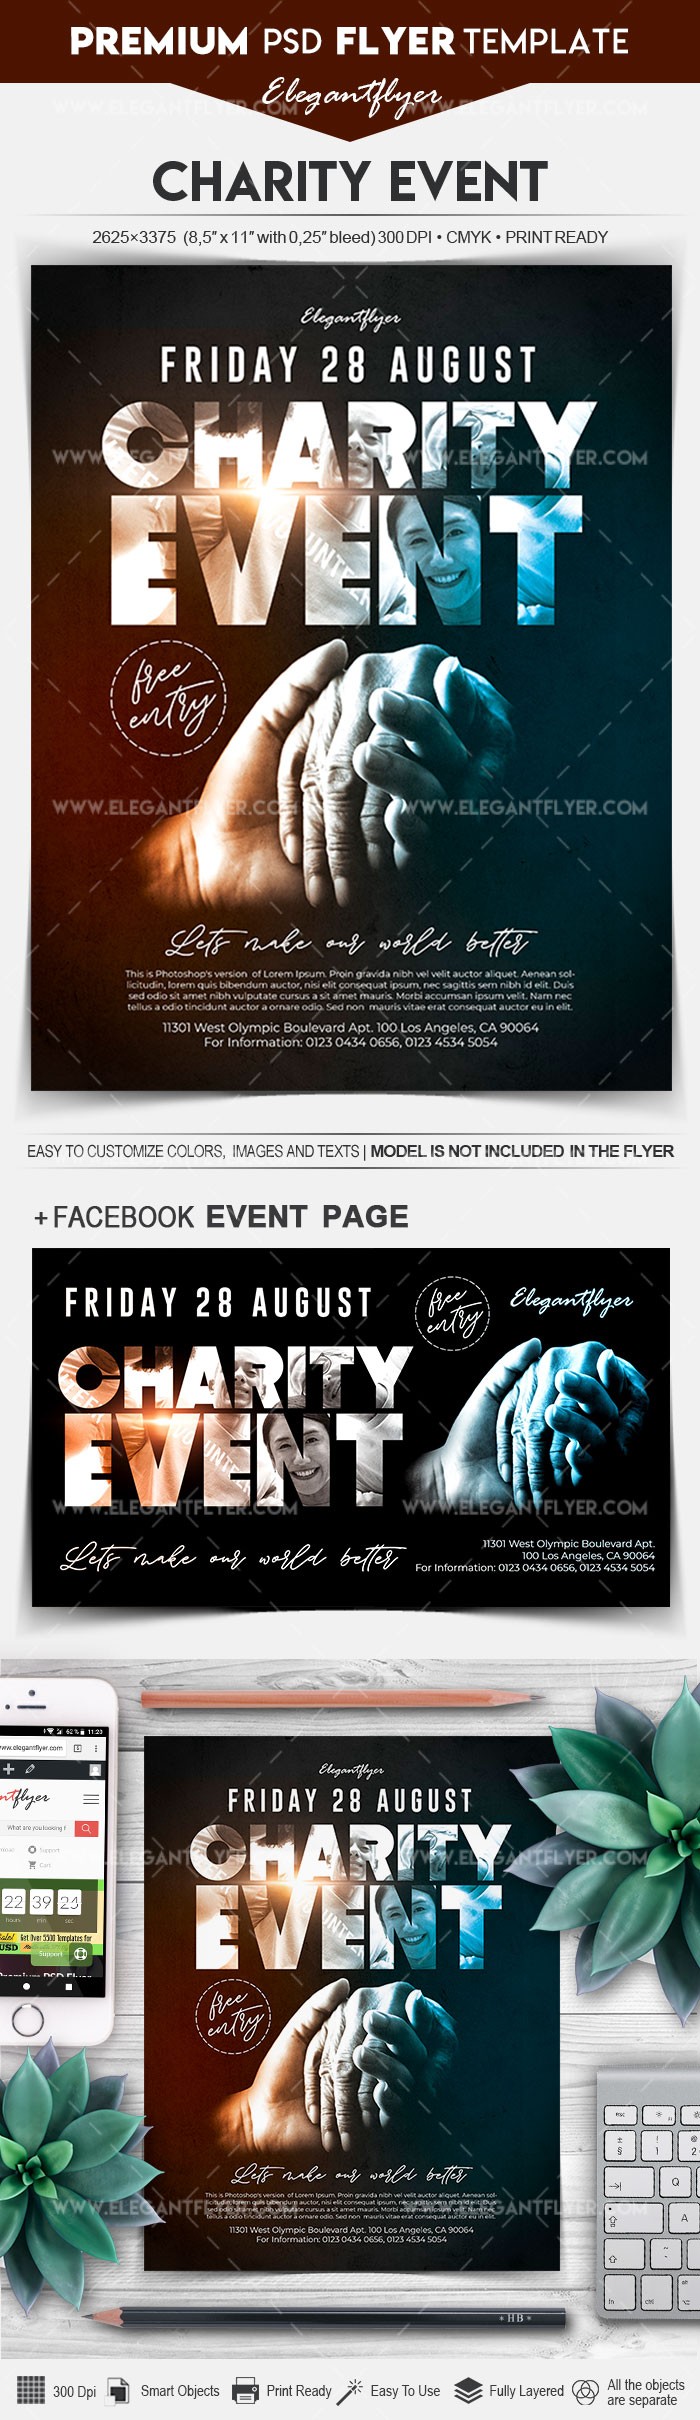 Evento de caridade by ElegantFlyer